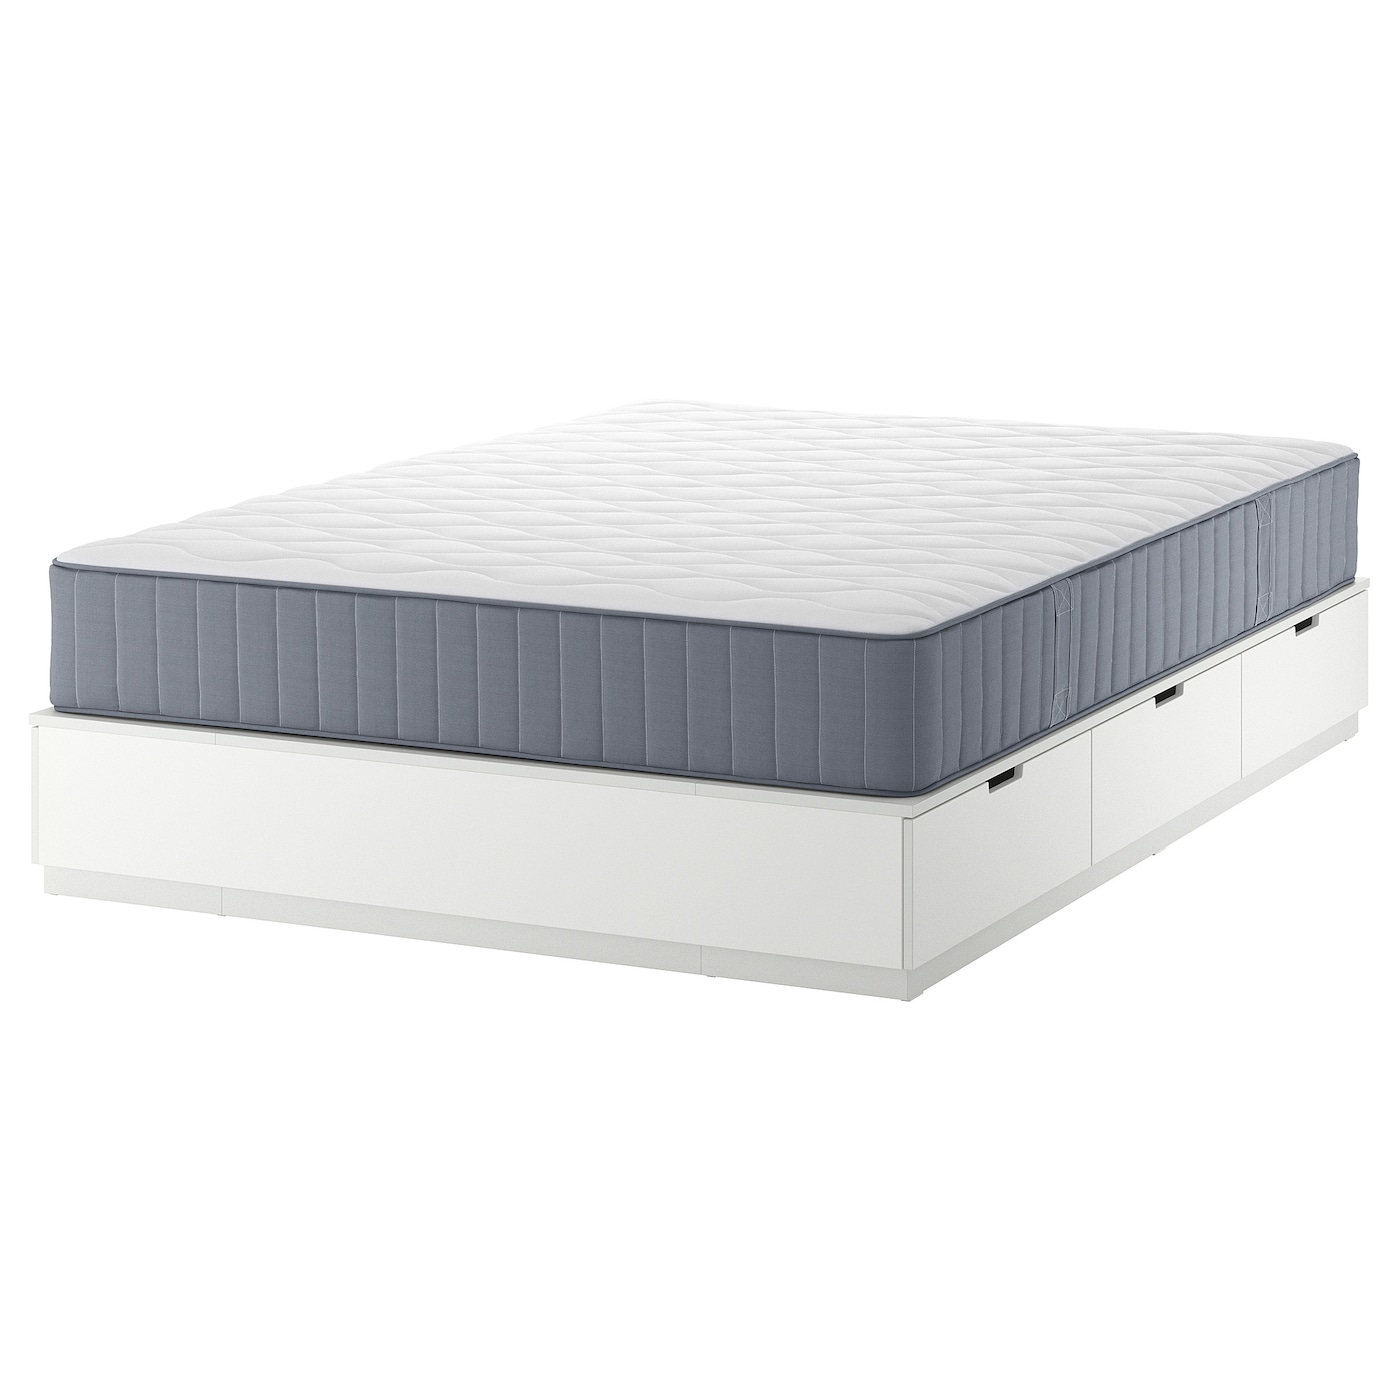 Каркас кровати с контейнером и матрасом - IKEA NORDLI, 200х140 см, матрас средне-жесткий, белый, НОРДЛИ ИКЕА